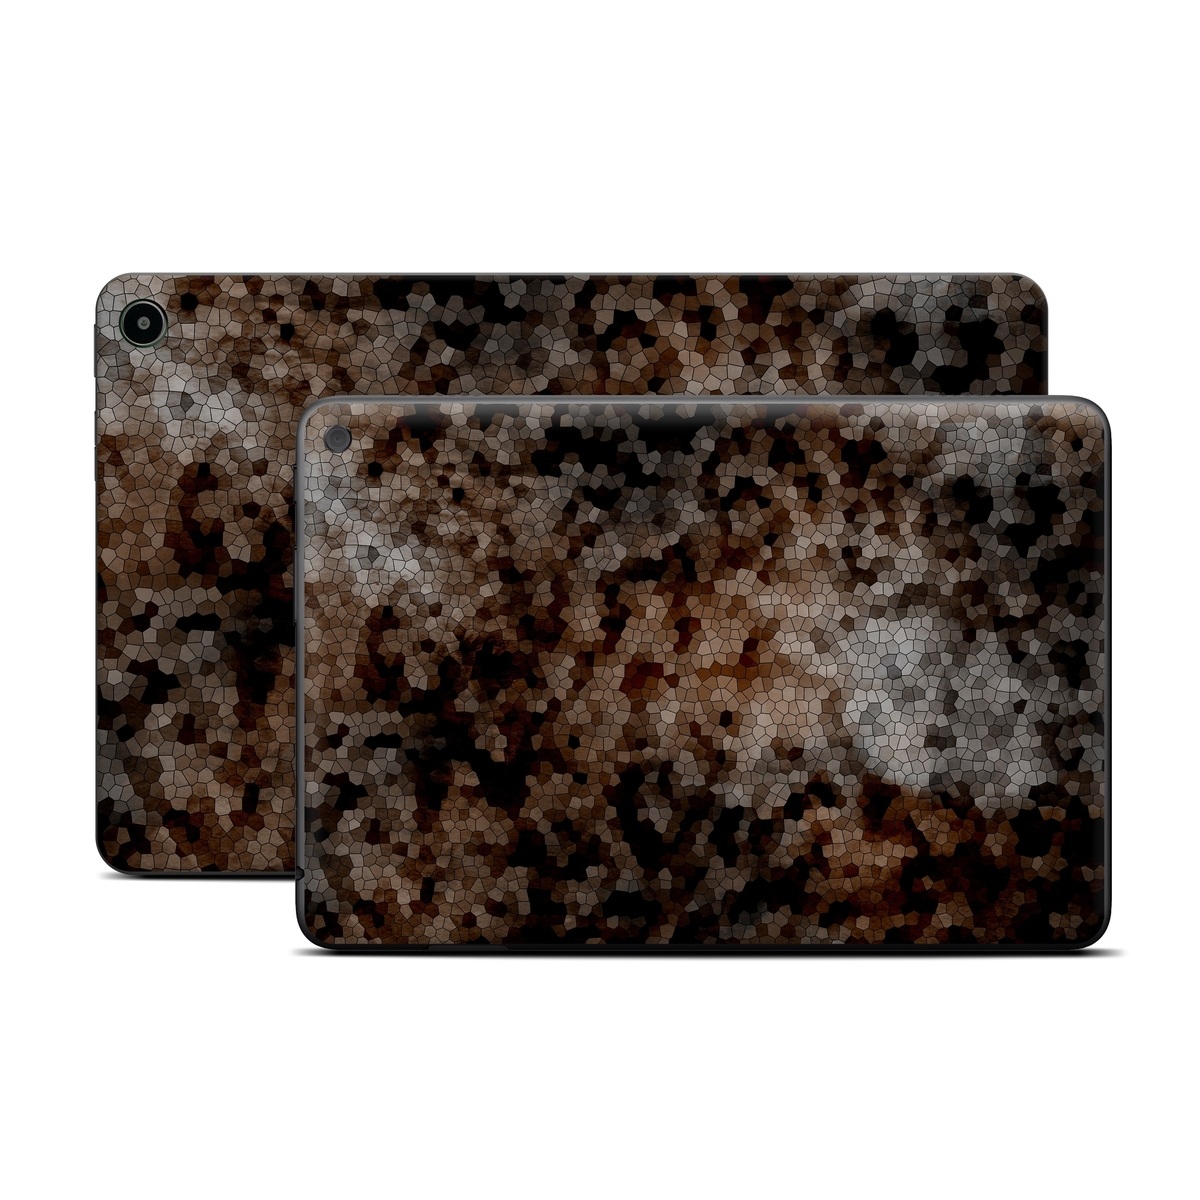 Amazon Fire Tablet Series Skin Skin design of Brown, Design, Soil, Pattern, Rock, Rust, Granite, Metal, with black, white, gray, brown colors